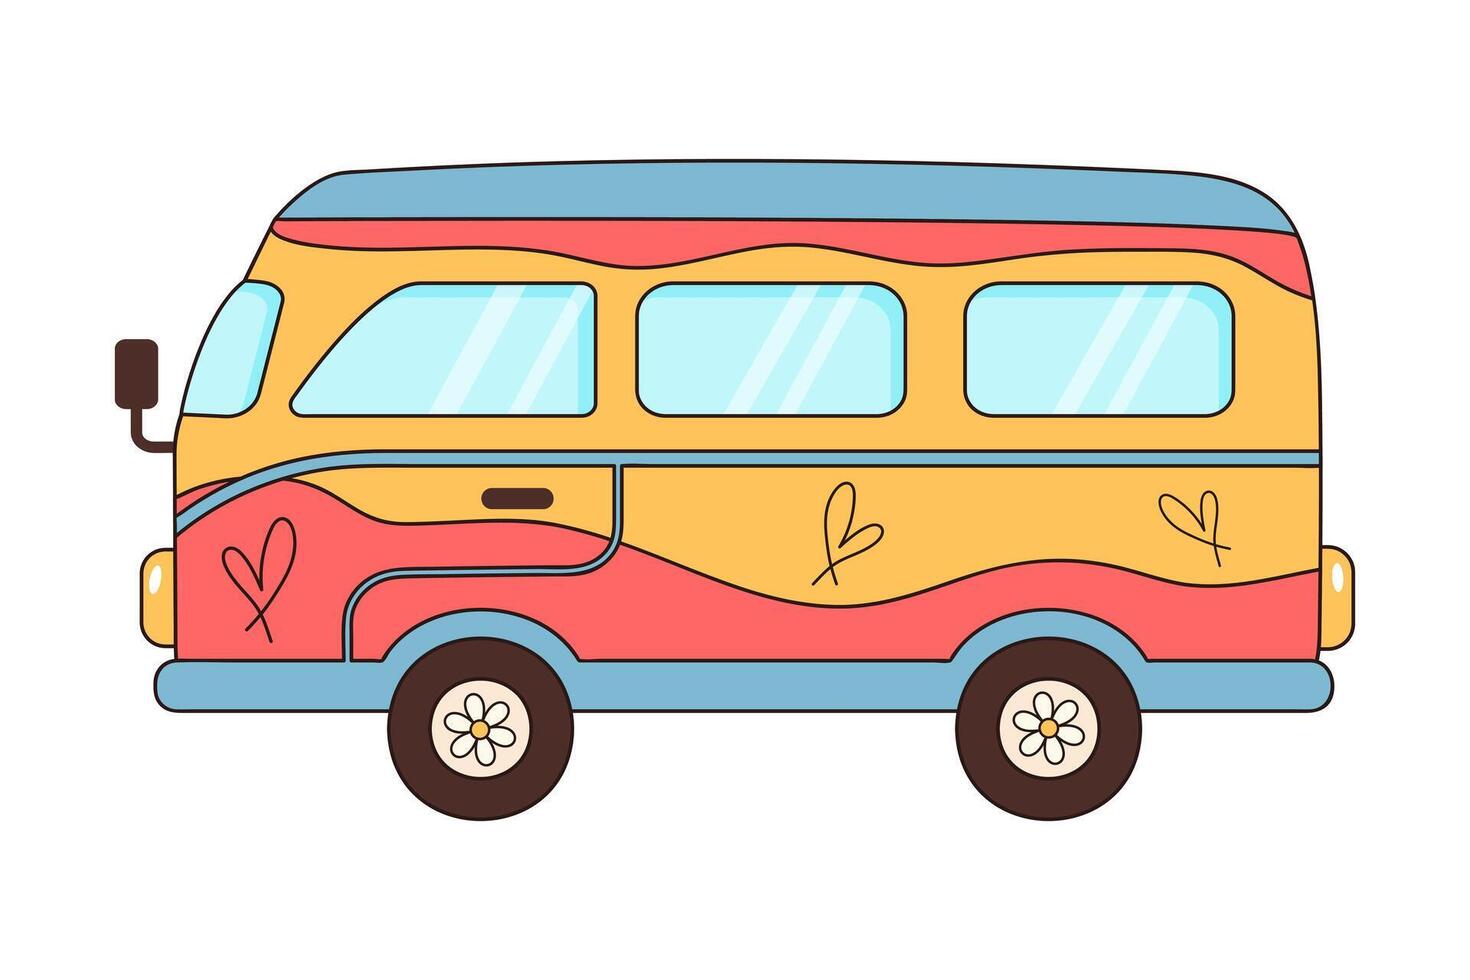 Groovy retro hippie bus with hearts. Vintage truck. Love, peace, travel, adventure, hippie culture concept. vector